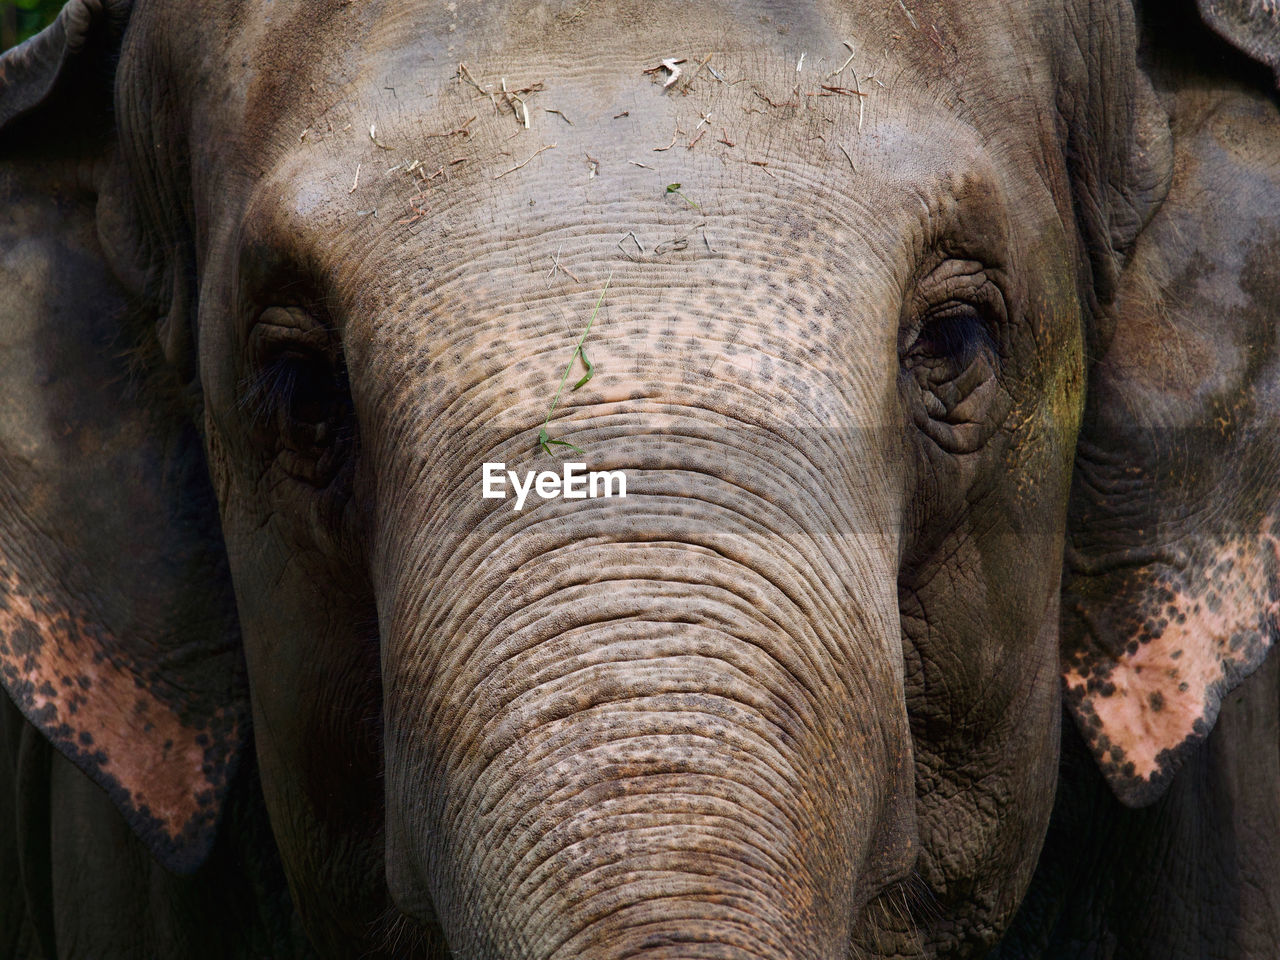 Close-up of elephant looking at camera